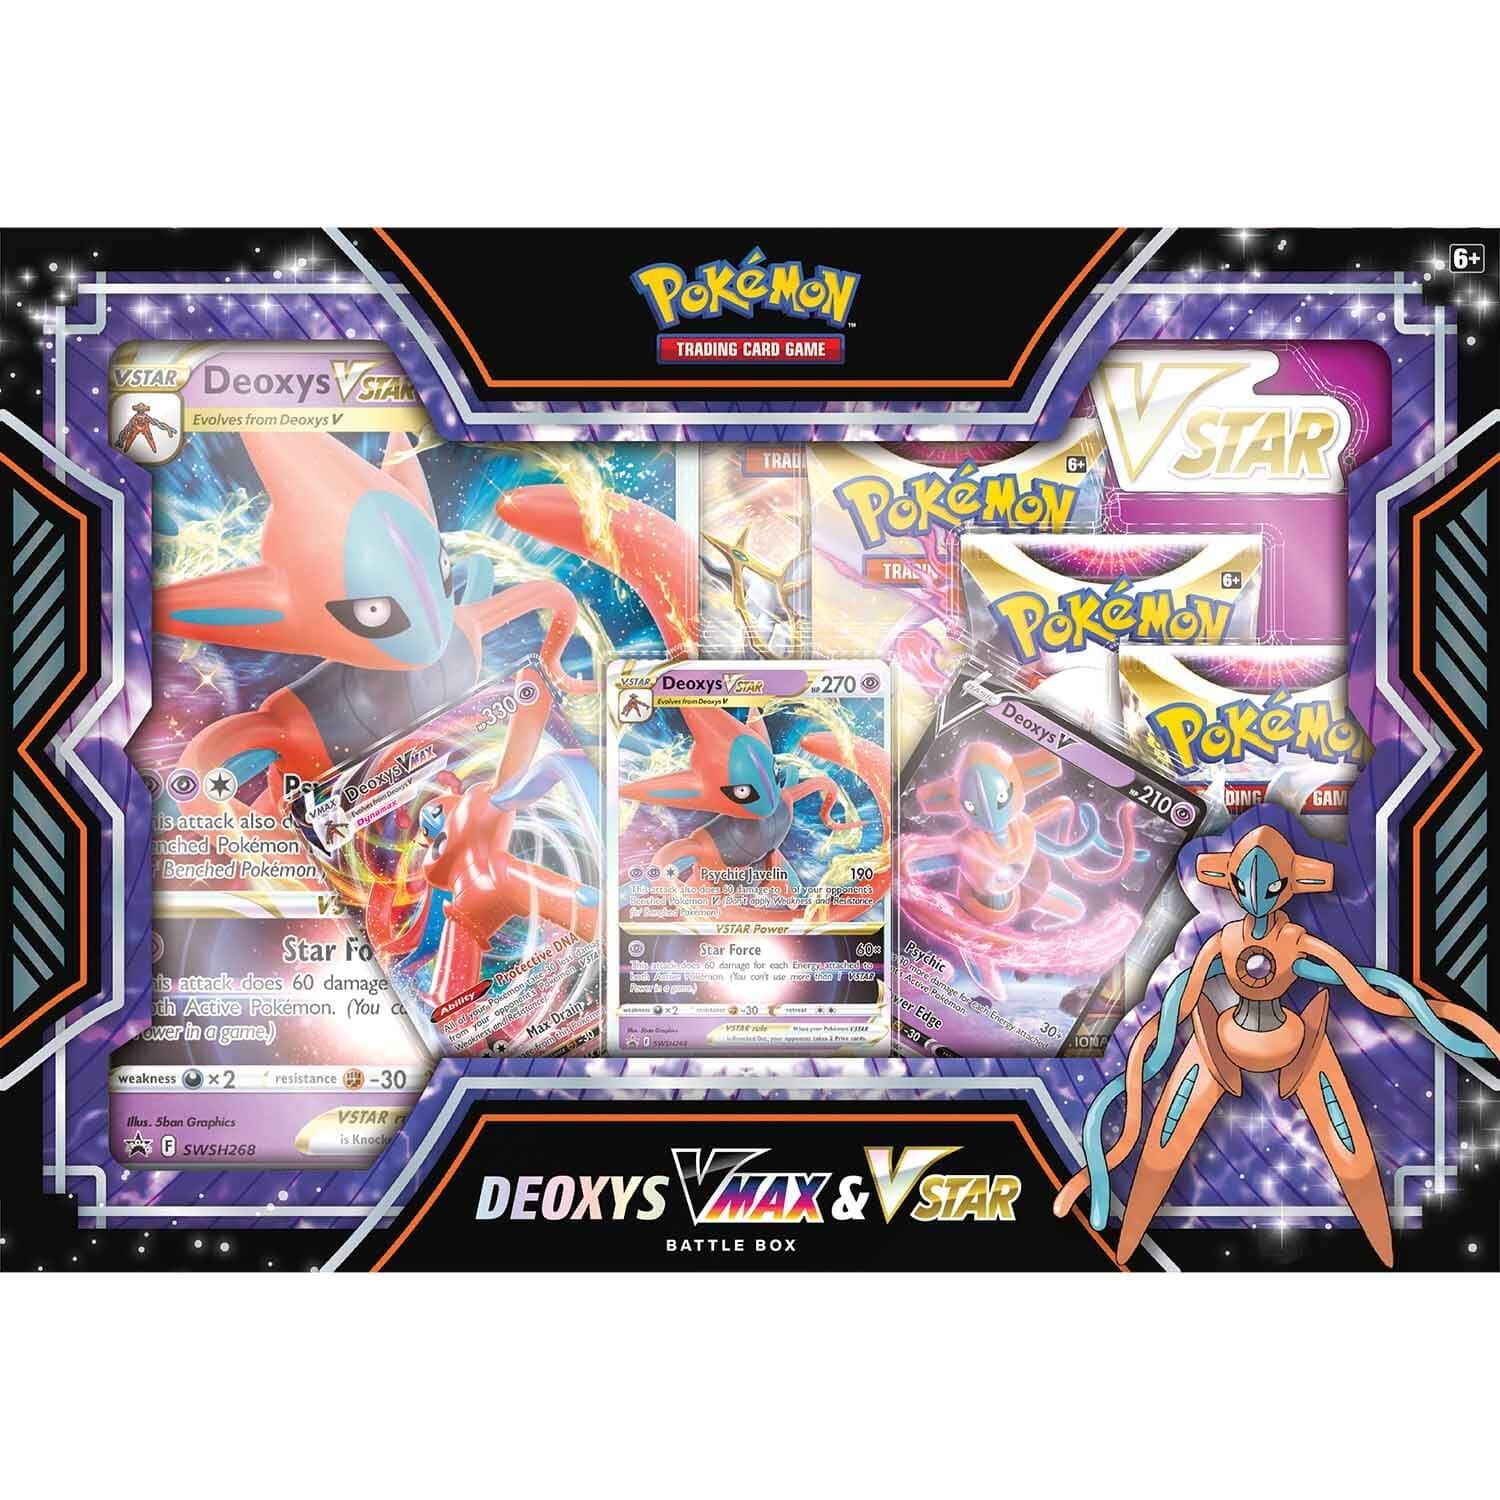 Pokémon Deoxys VMAX & VSTAR Battle Box - EN